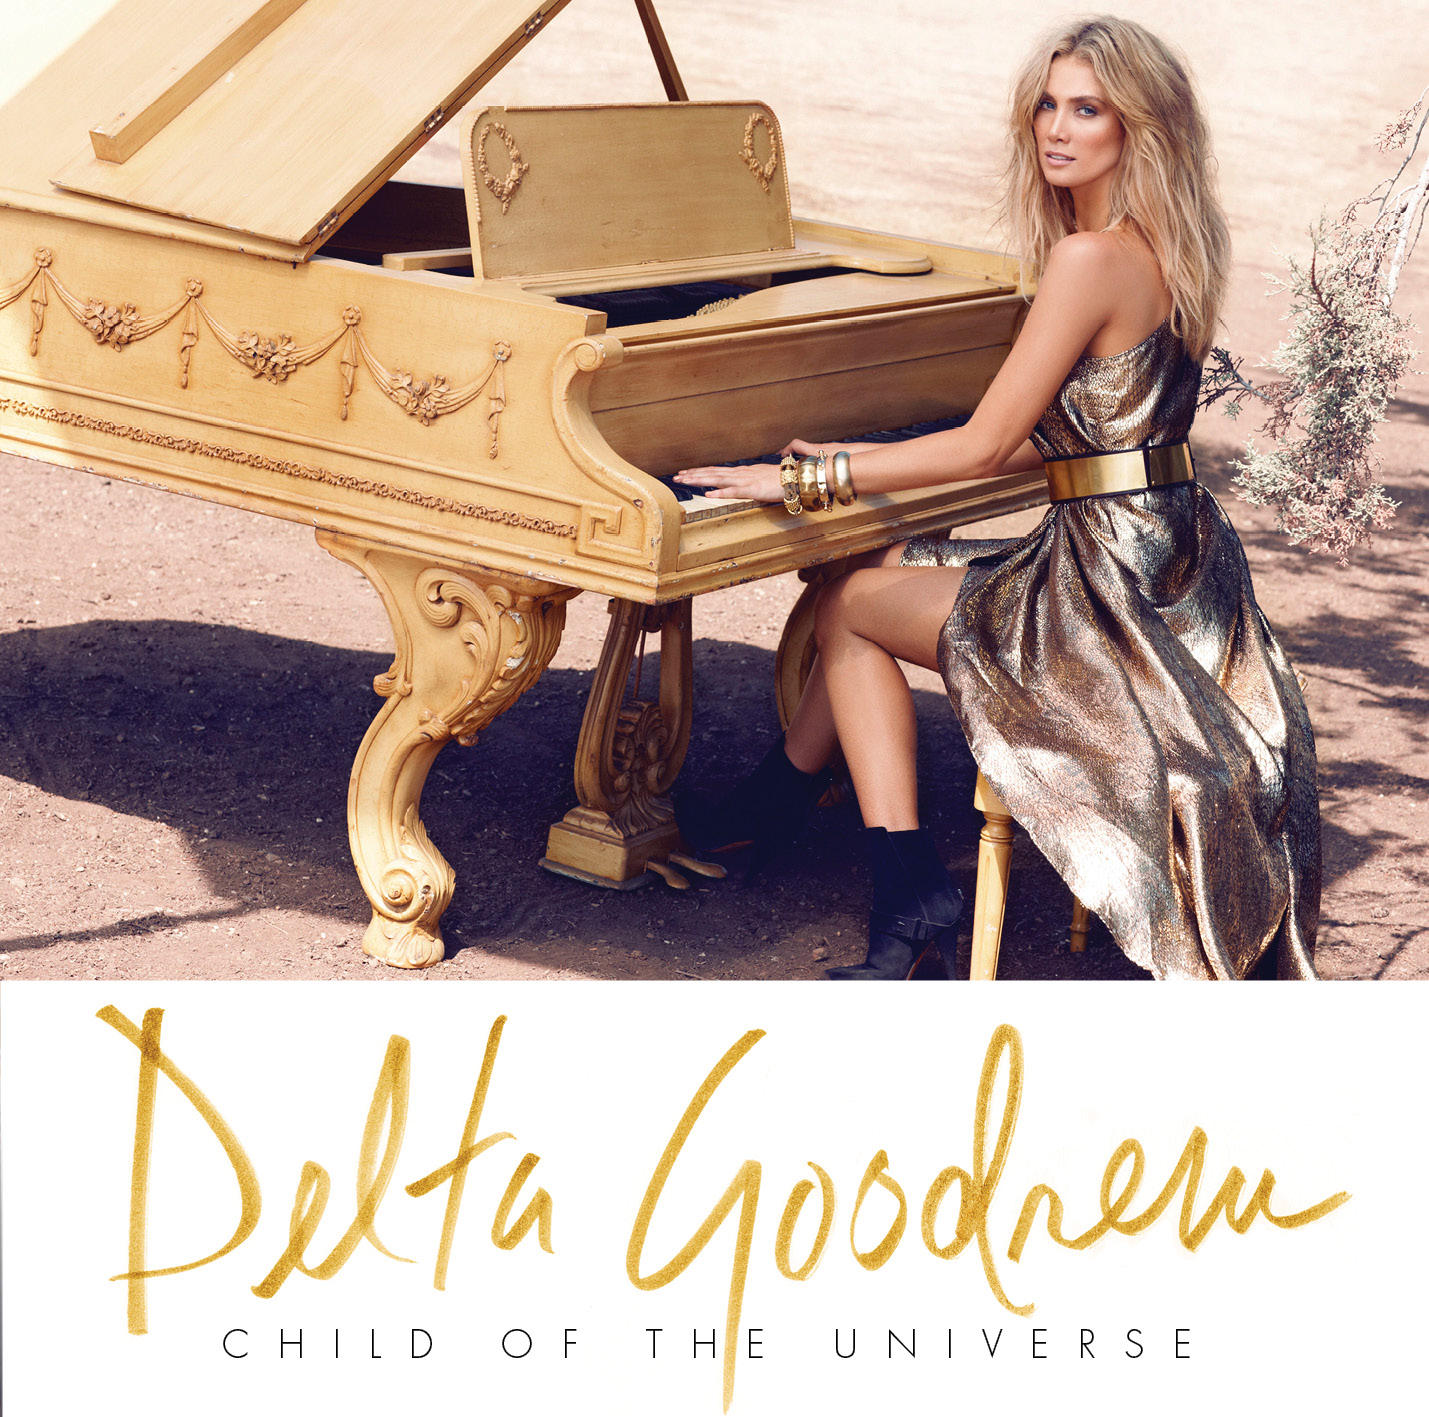 [Album Cover] Delta Goodrem - Child Of The Universe A4pXfxJCEAA5bJ8